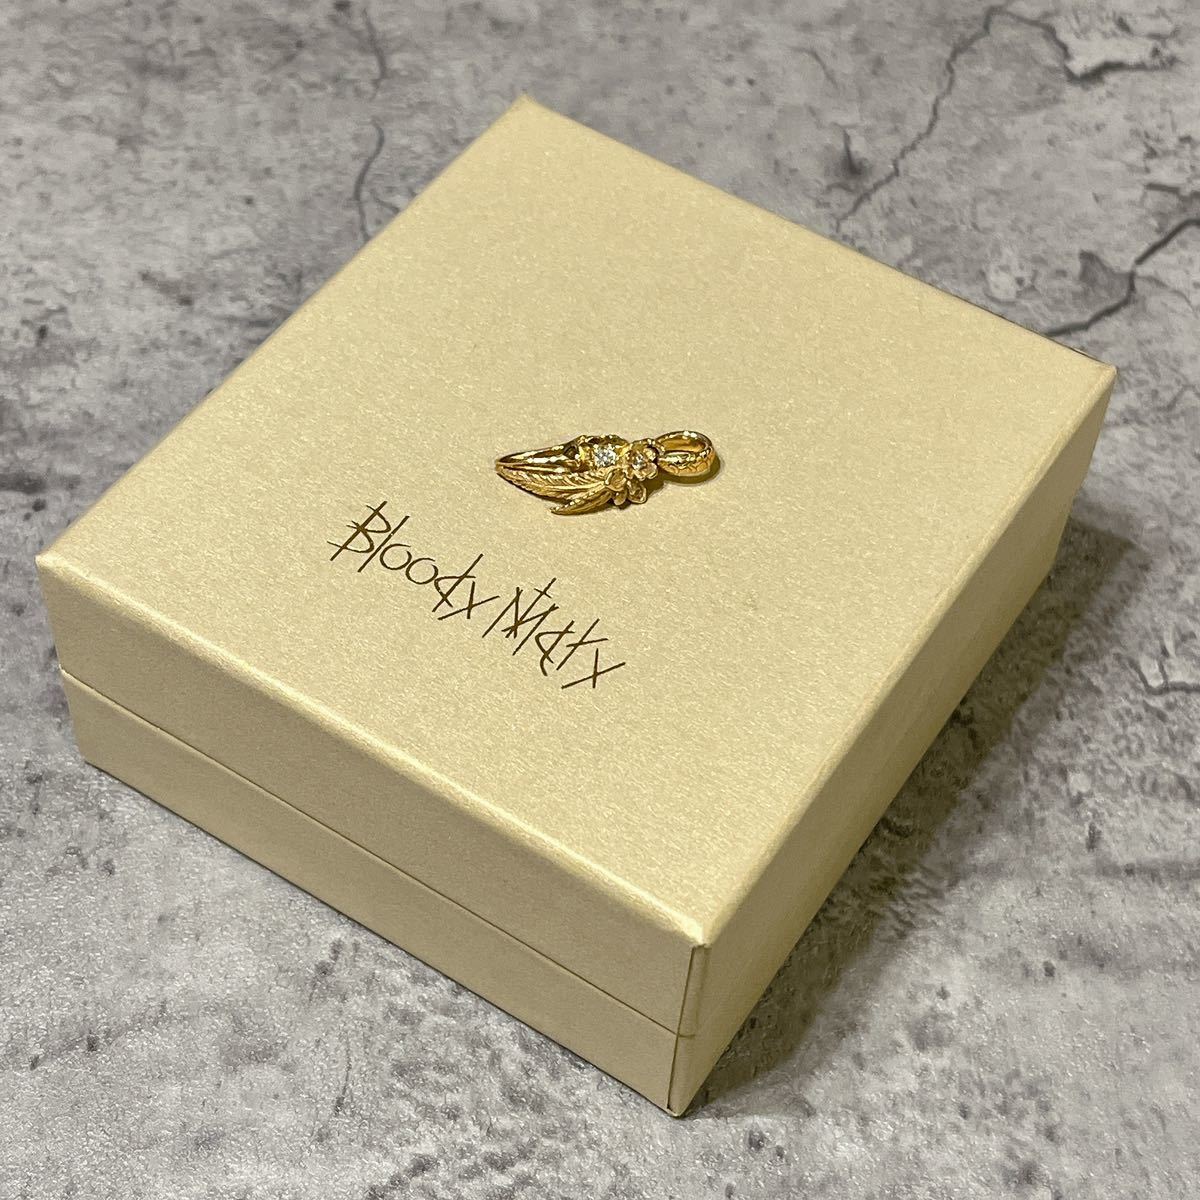  rare limited goods blati Marie K18 Gold & diamond ... charm pendant top 